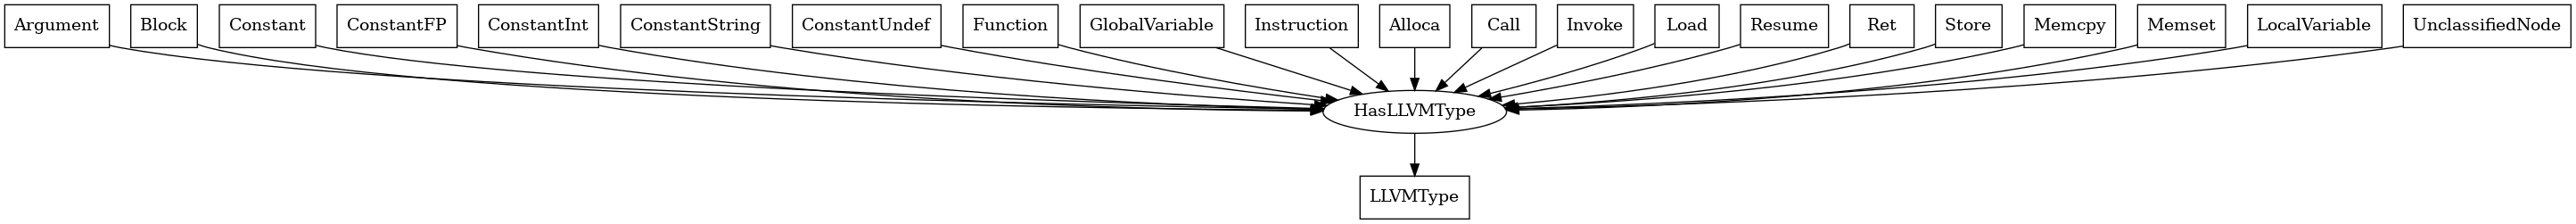 Entity-relationship diagram for LLVMType nodes